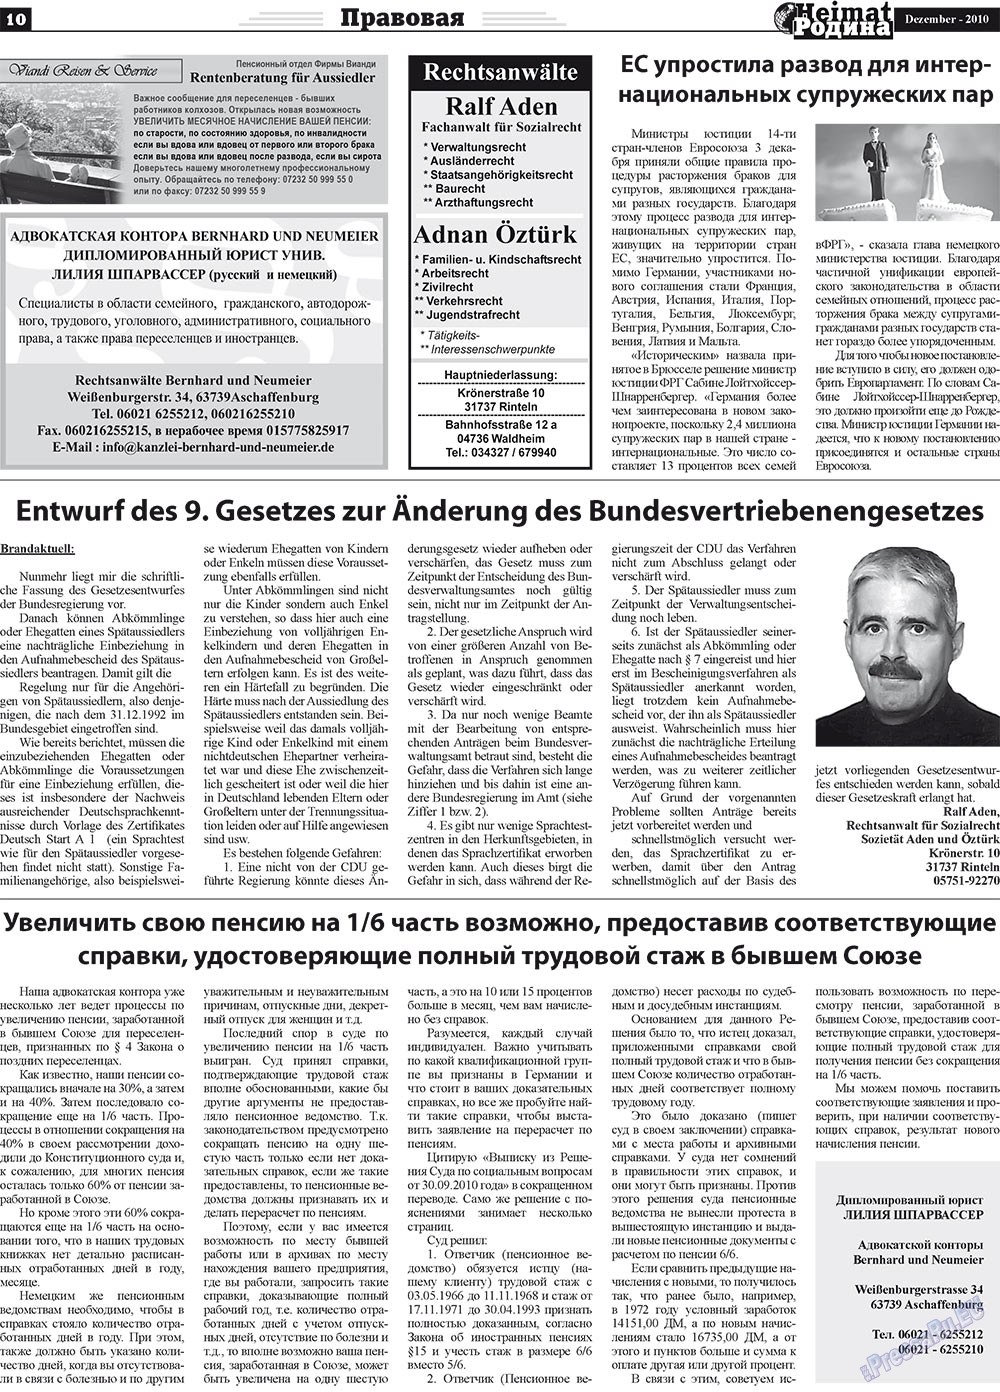 Heimat-Родина, газета. 2010 №12 стр.10